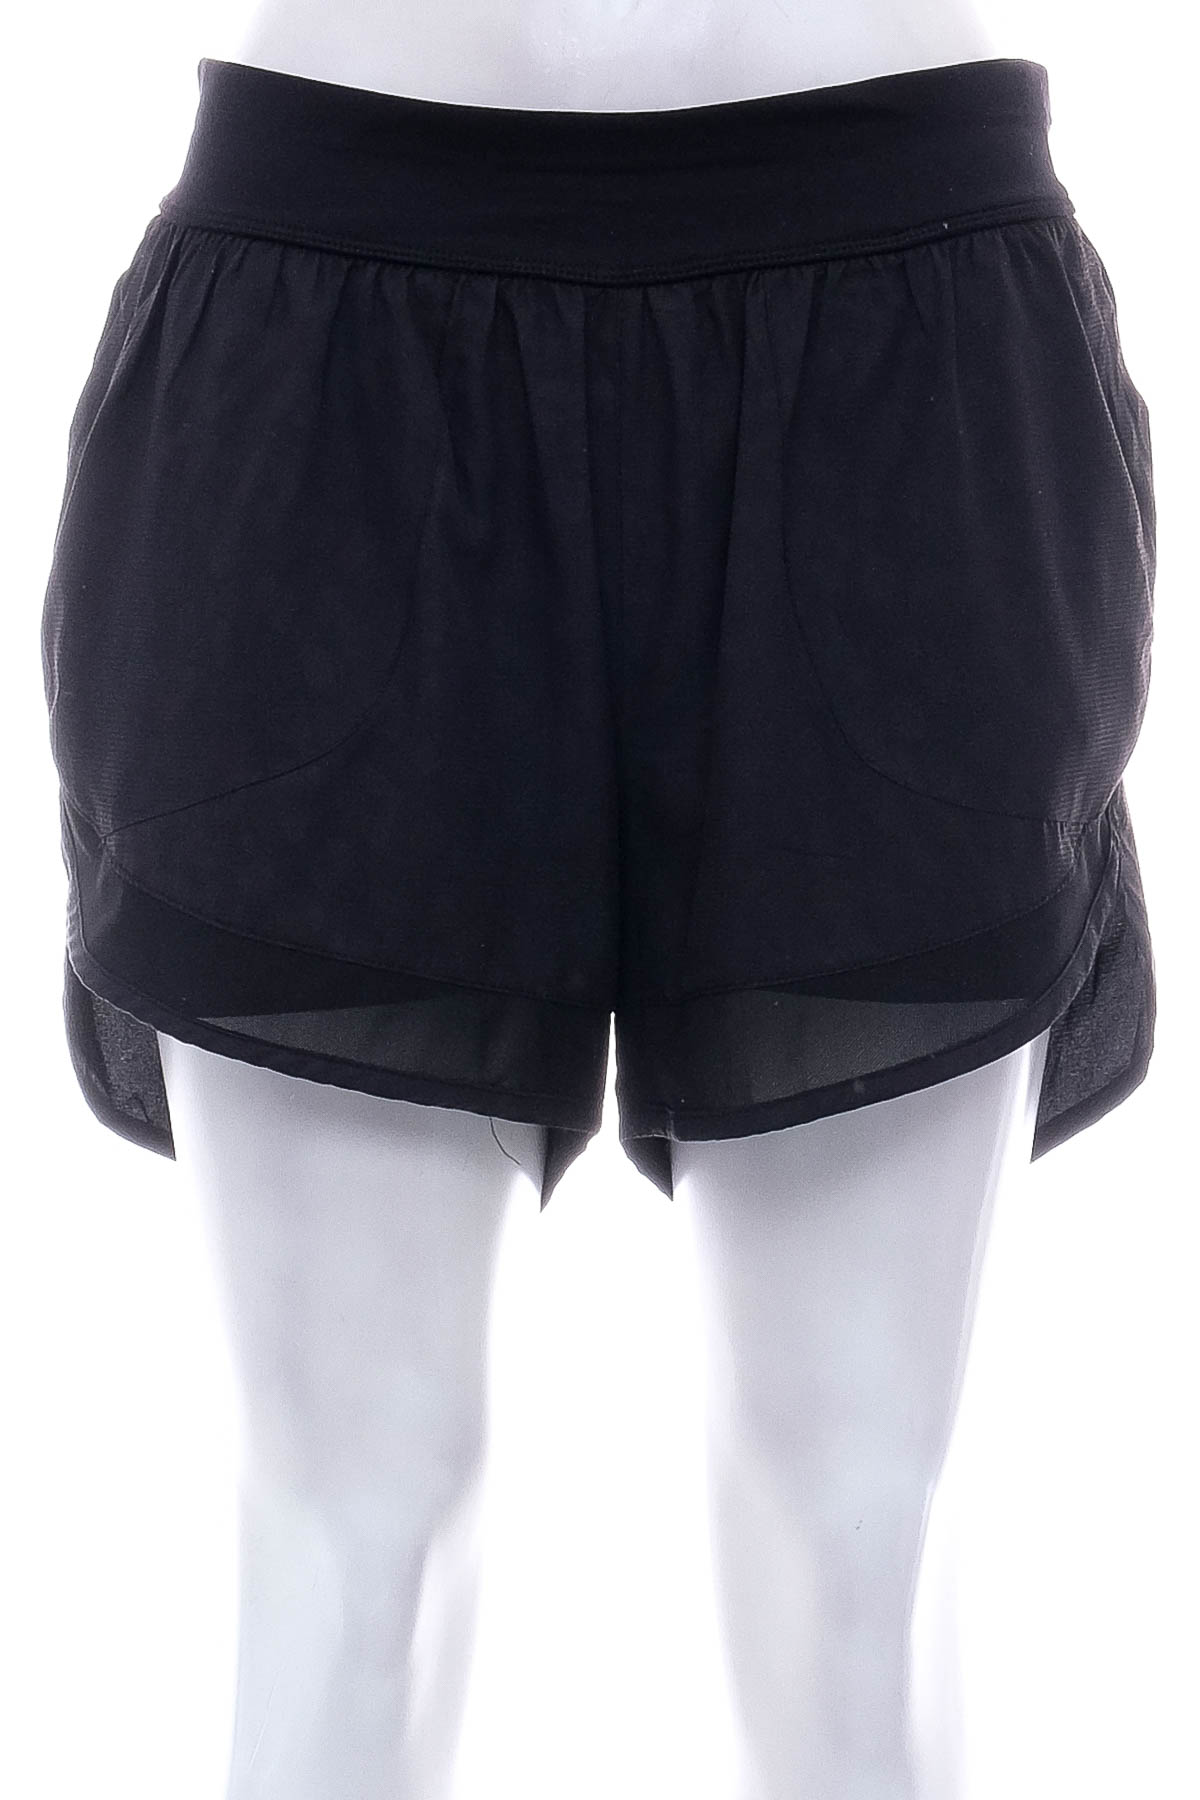 Women's shorts - Anko Active - 0